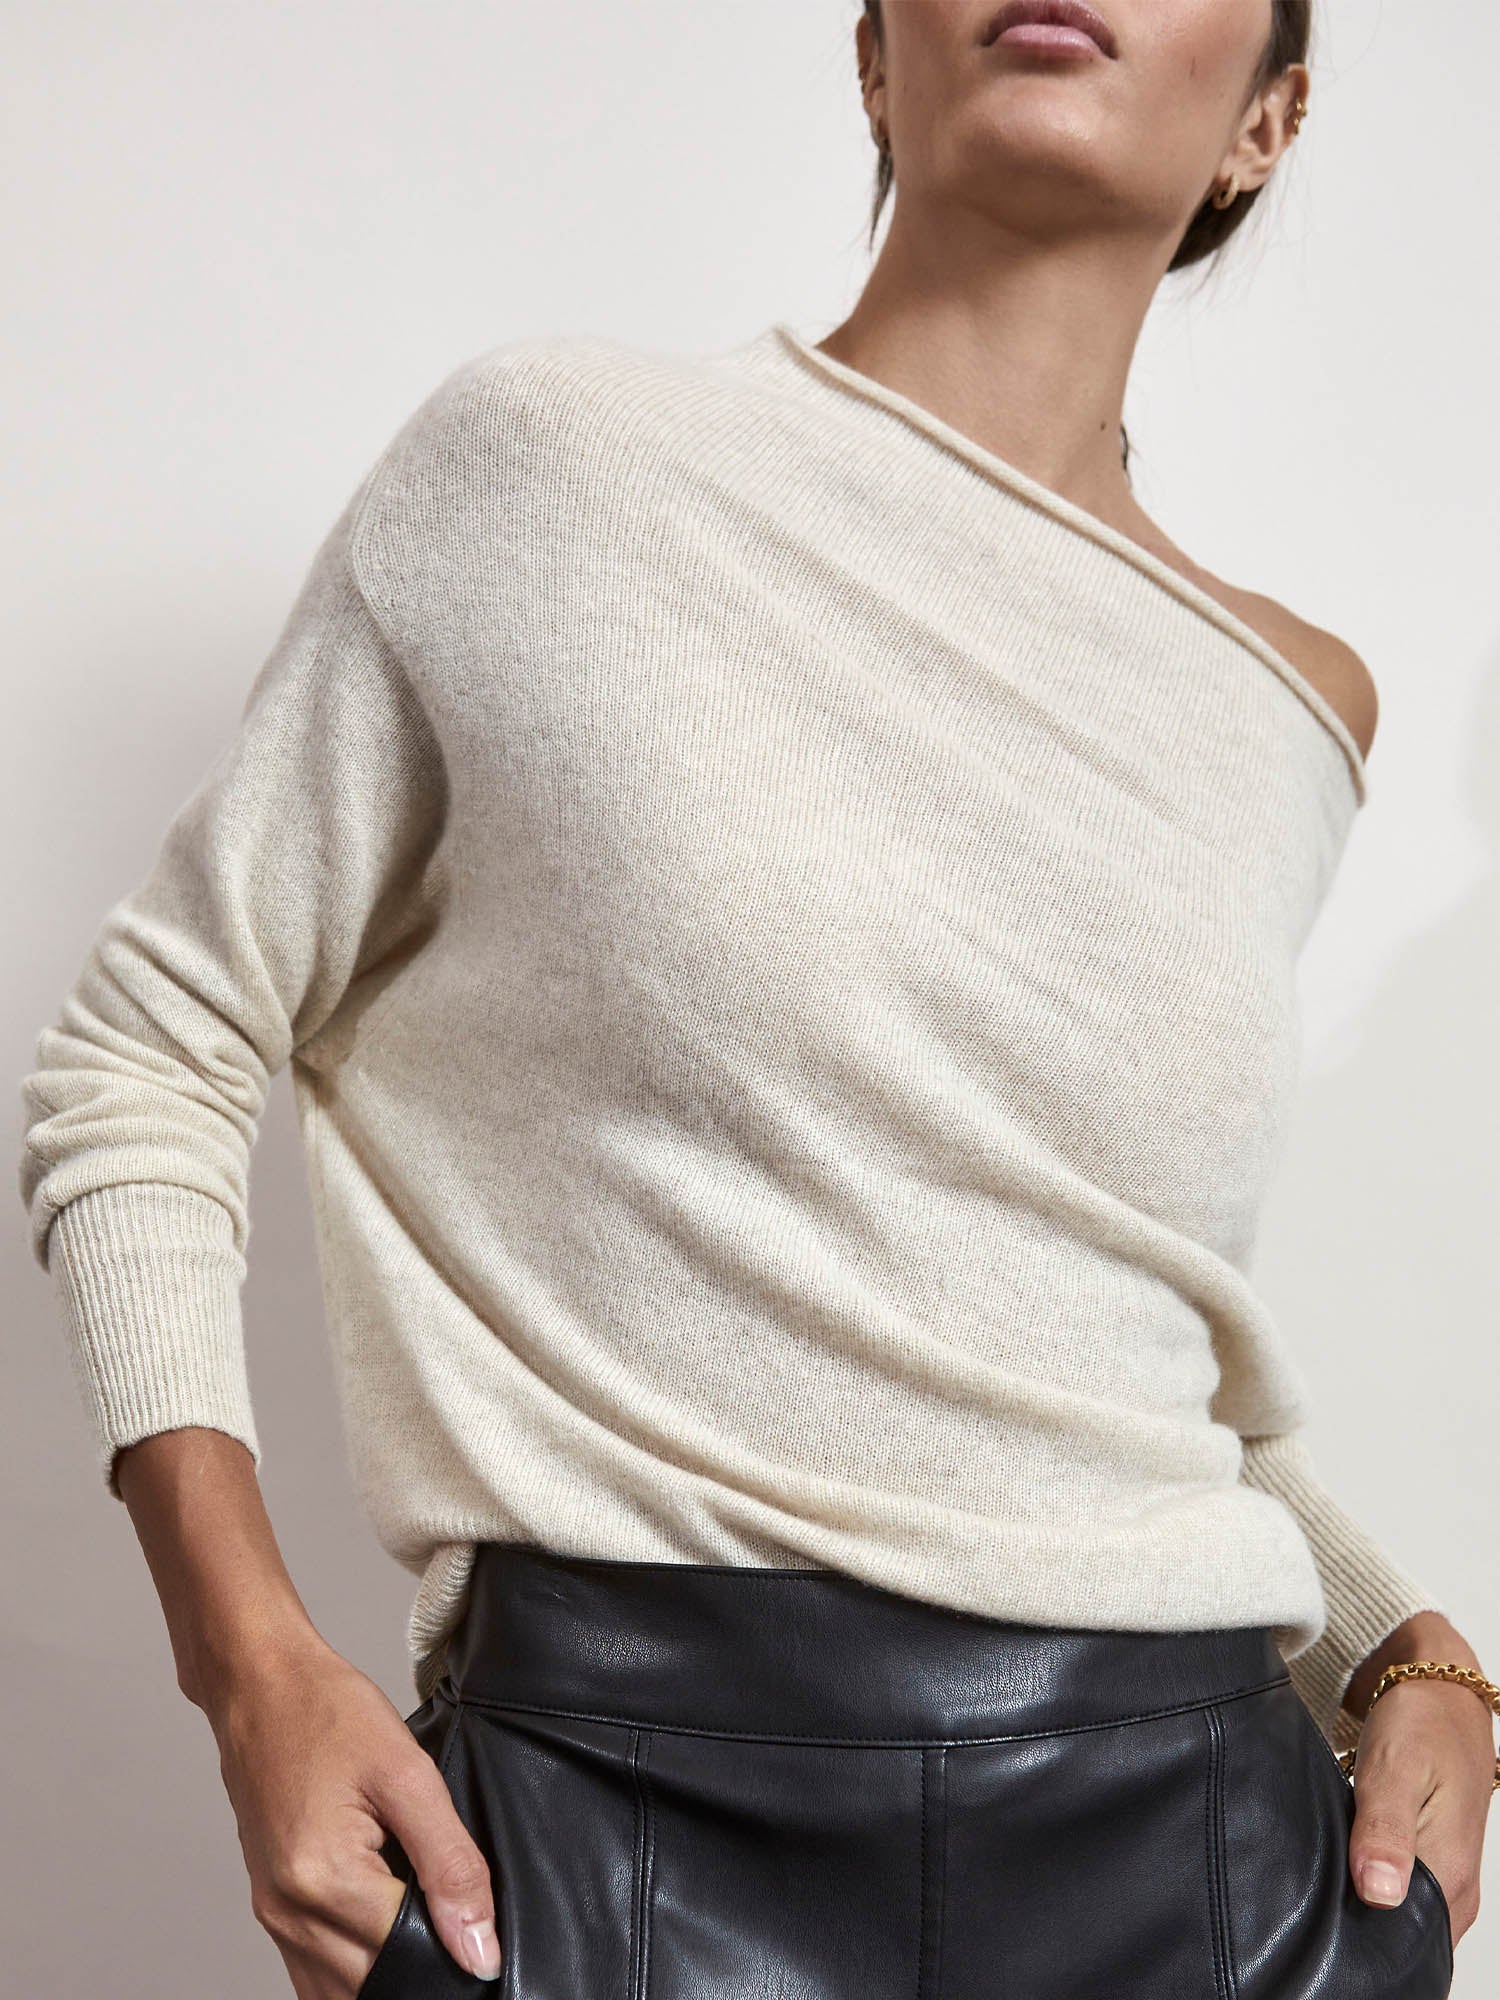 Rib-knit Open-back Sweater - Cream - Ladies